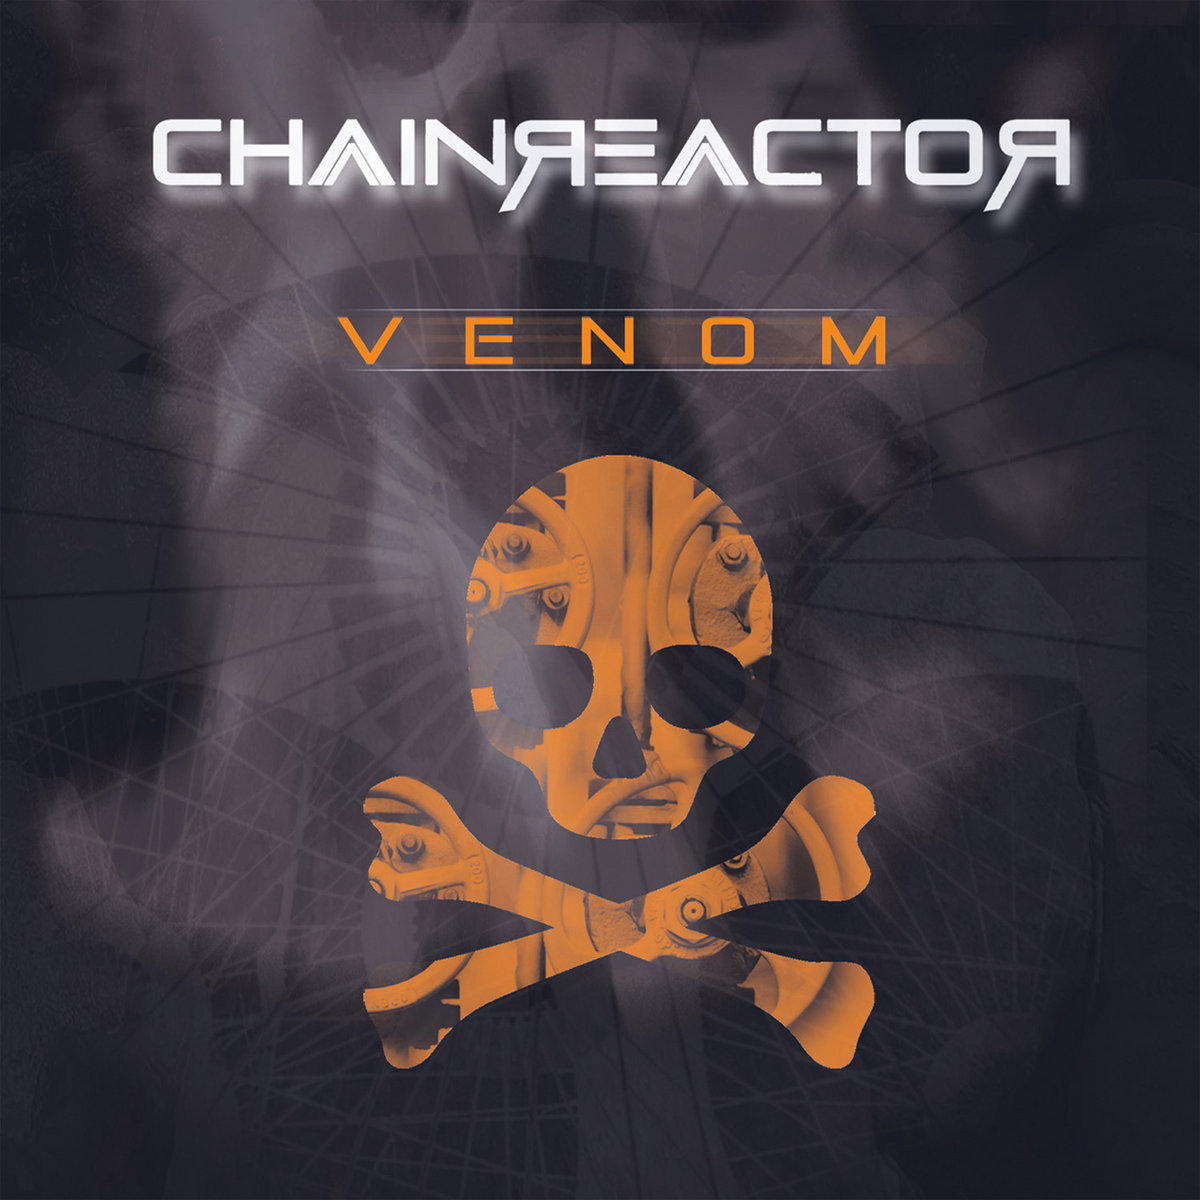 Chainreactor, “Venom”